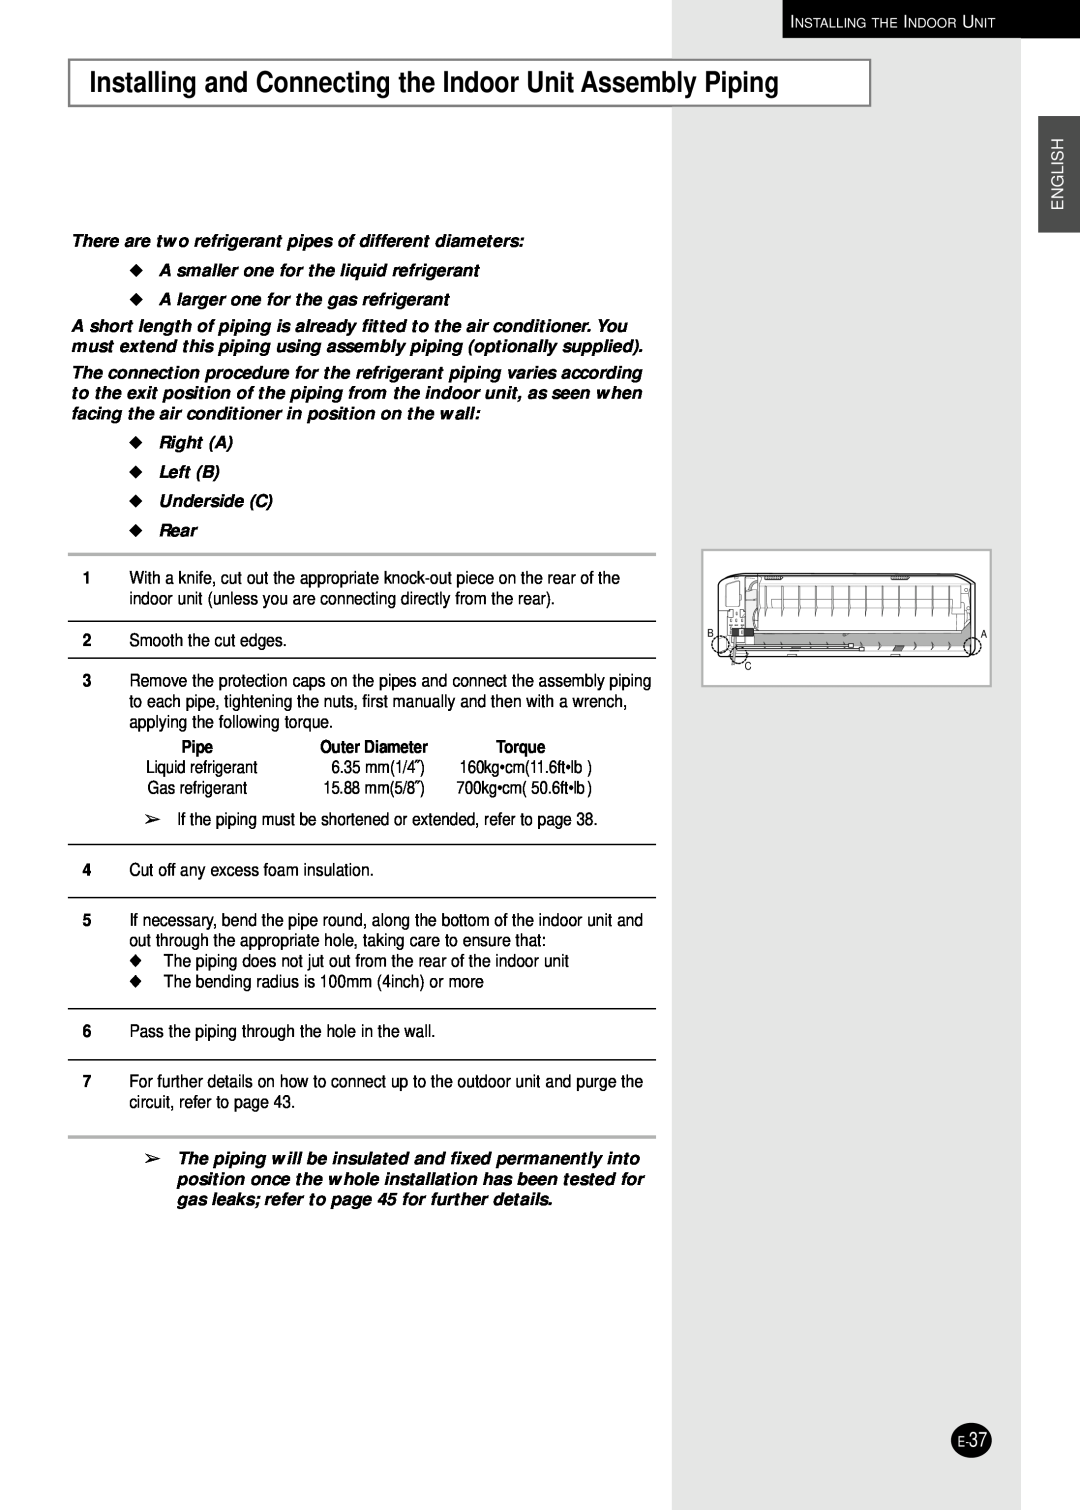 Samsung AQ30C1(2)BC installation manual A smaller one for the liquid refrigerant, Pipe, Torque, English 